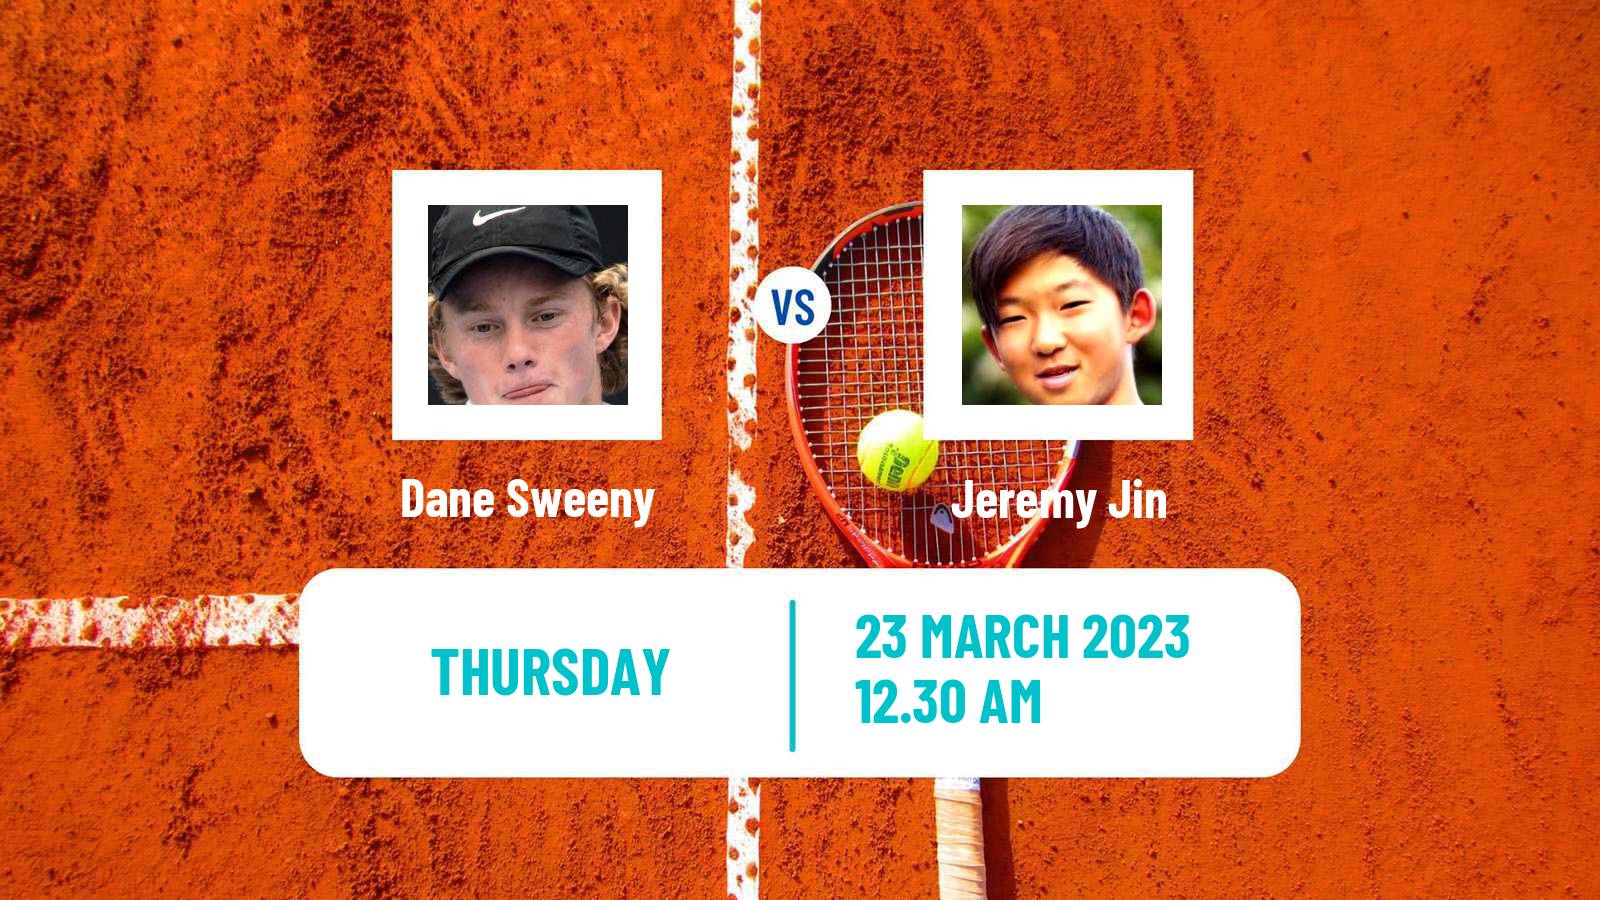 Tennis ITF Tournaments Dane Sweeny - Jeremy Jin